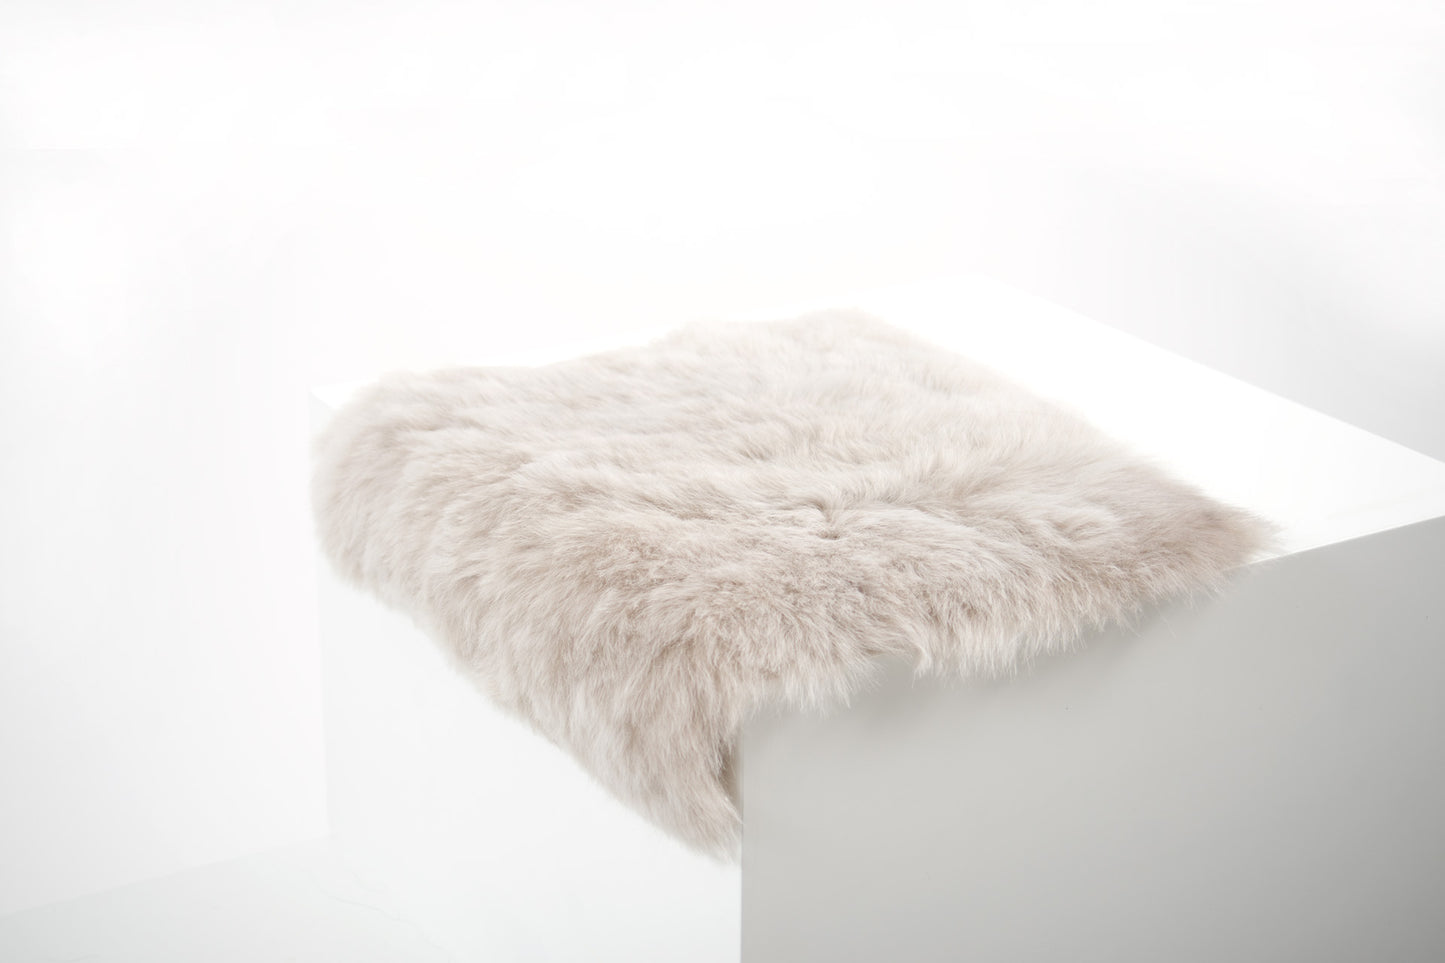 Shorn Linen Icelandic Sheepskin Chair Pad - Black Sheep (White Light)